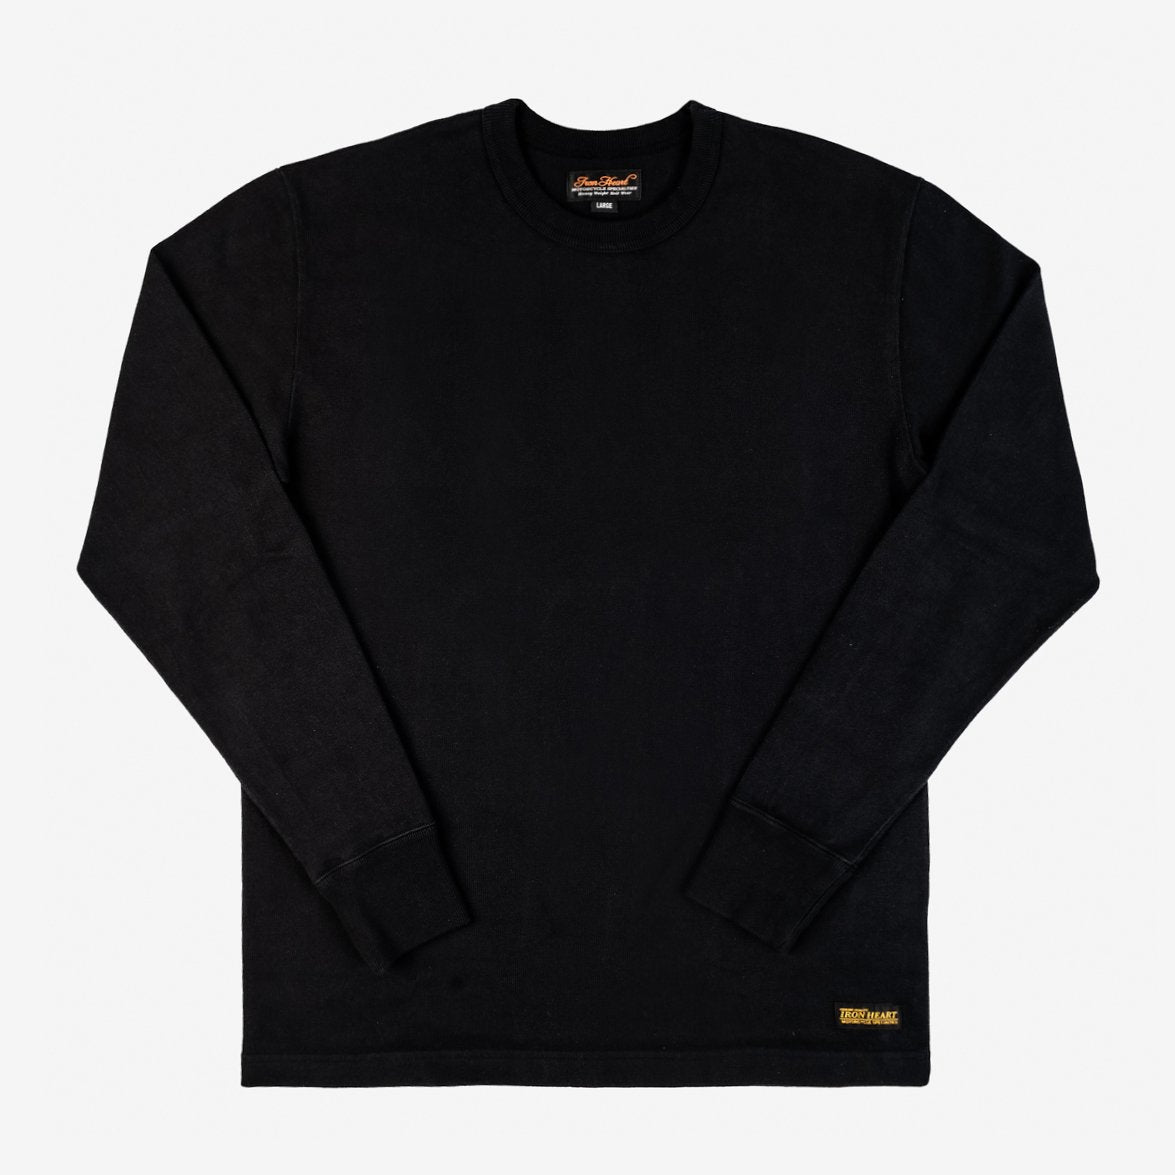 IHTL-1501-BLK 11oz Cotton Knit Crewneck Sweater Black